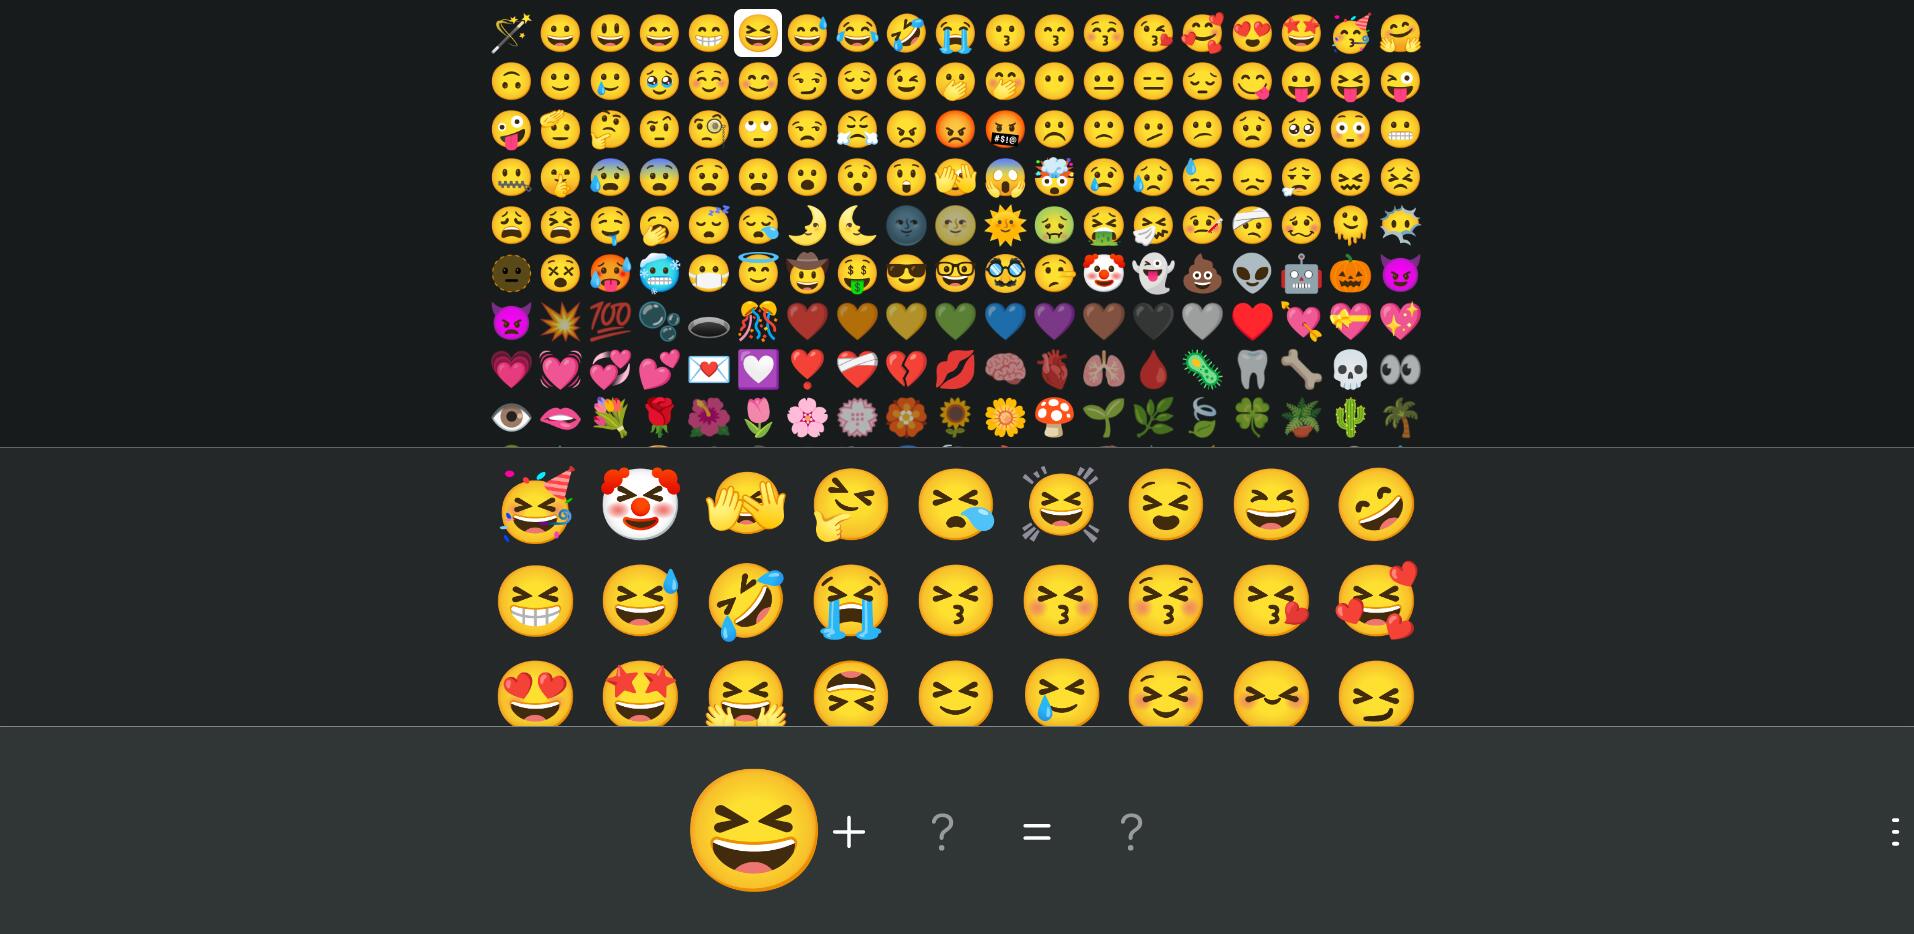 emoji表情，emoji合成器，emoji表情合成器，EmojiKitchen